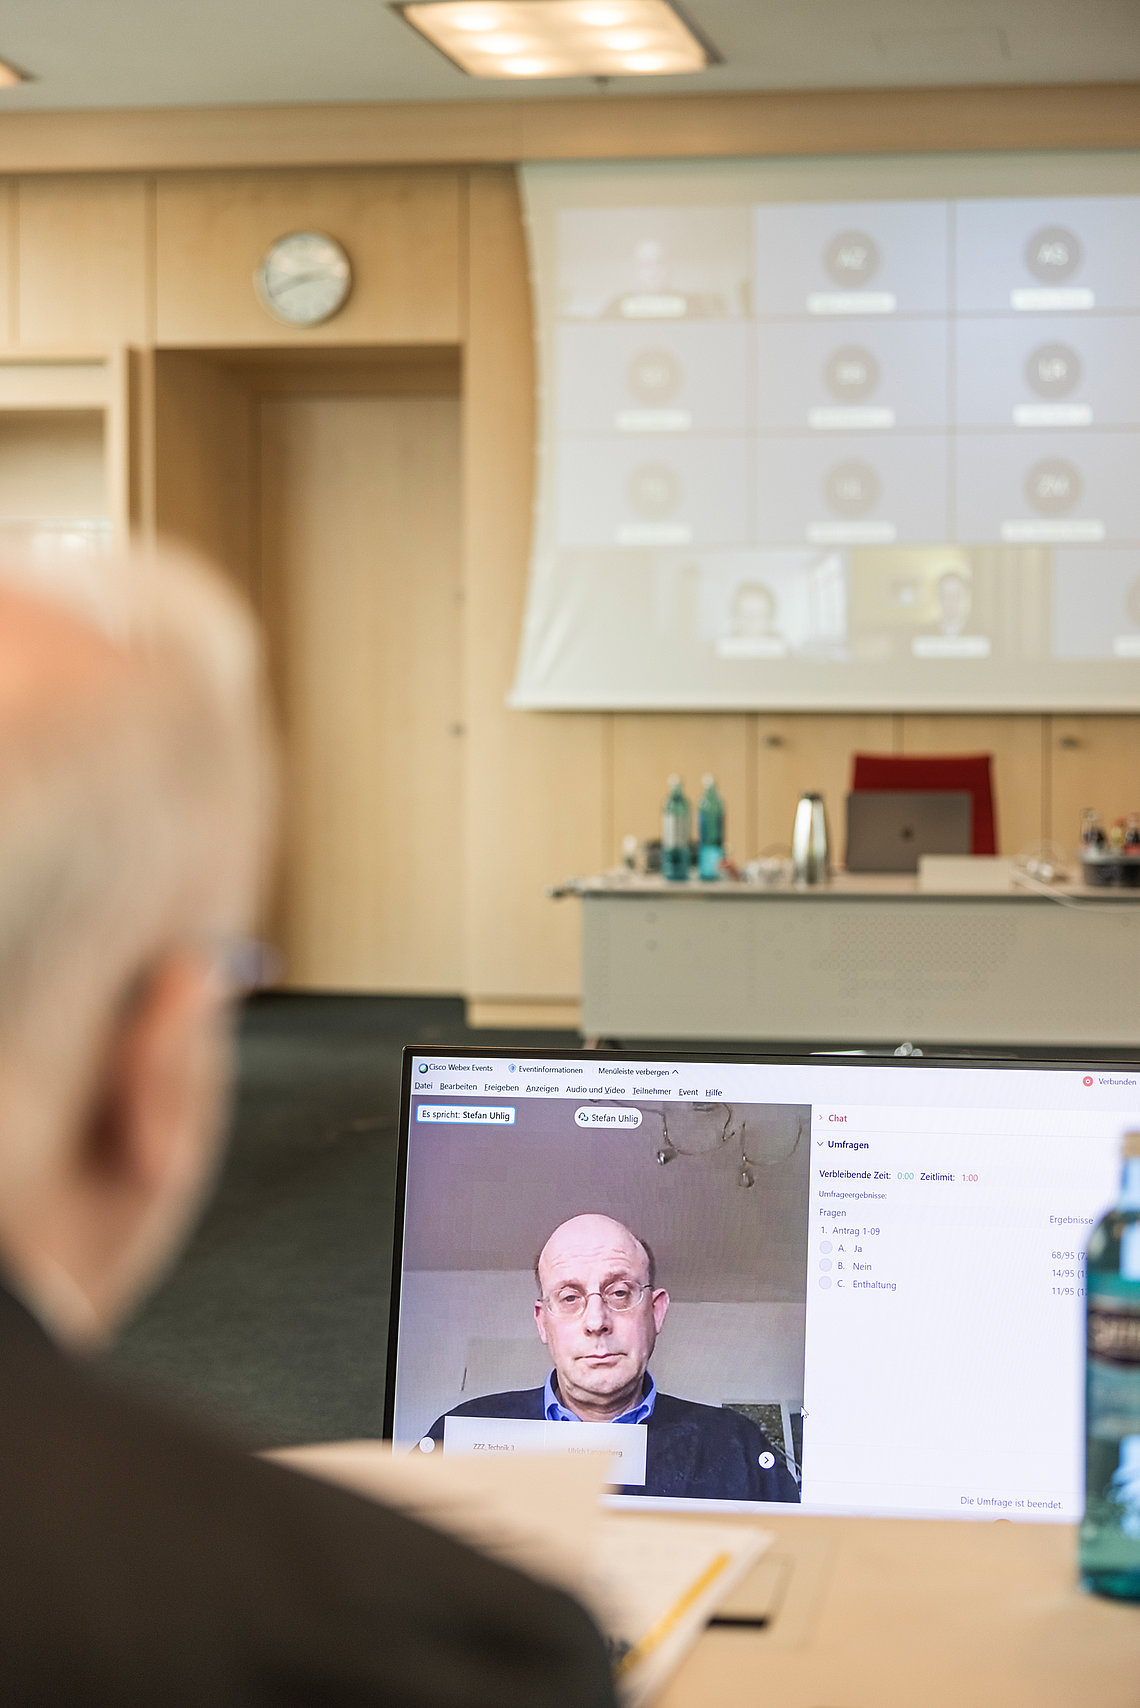 Dekan der Medizinischen Fakultät der Rheinisch-Westfälischen Technischen Hochschule Aachen, Professor Dr. Stefan Uhlig, per Video zugeschaltet zur Kammerversammlung